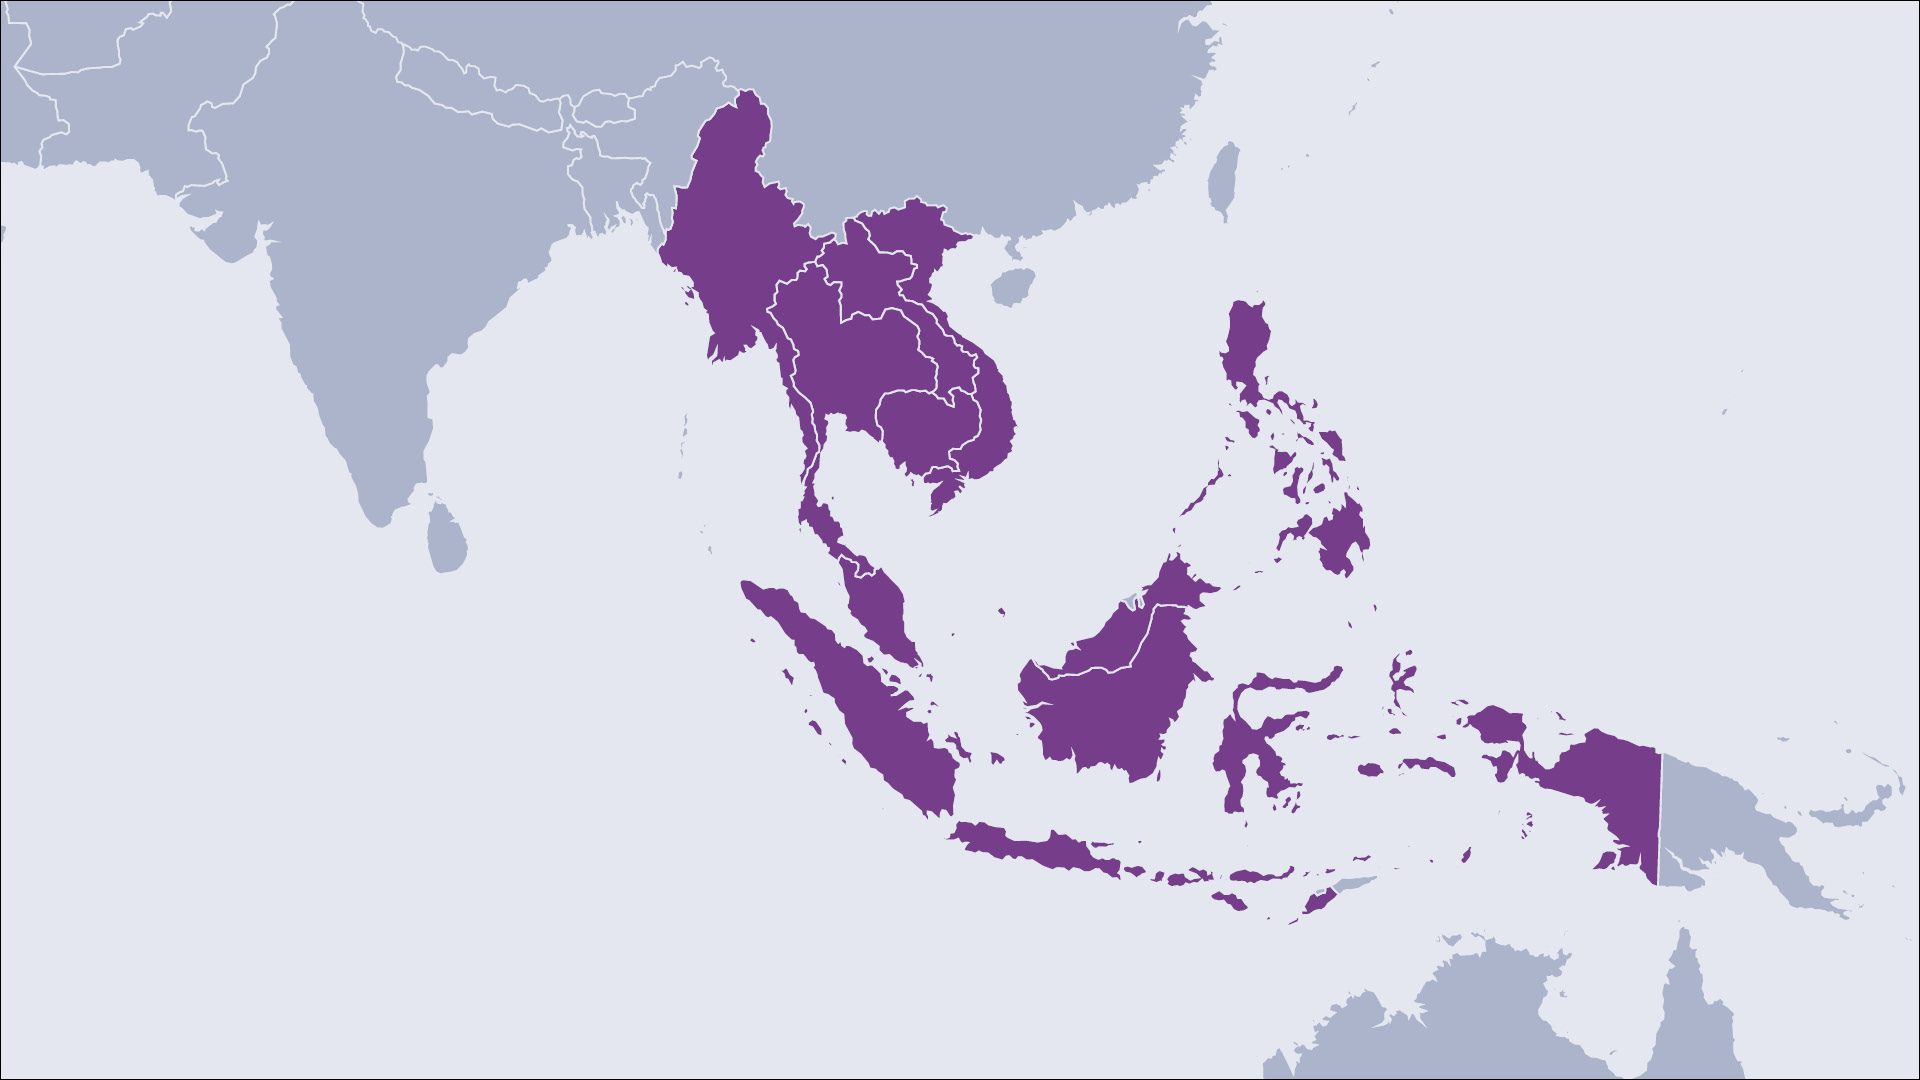 Südostasien